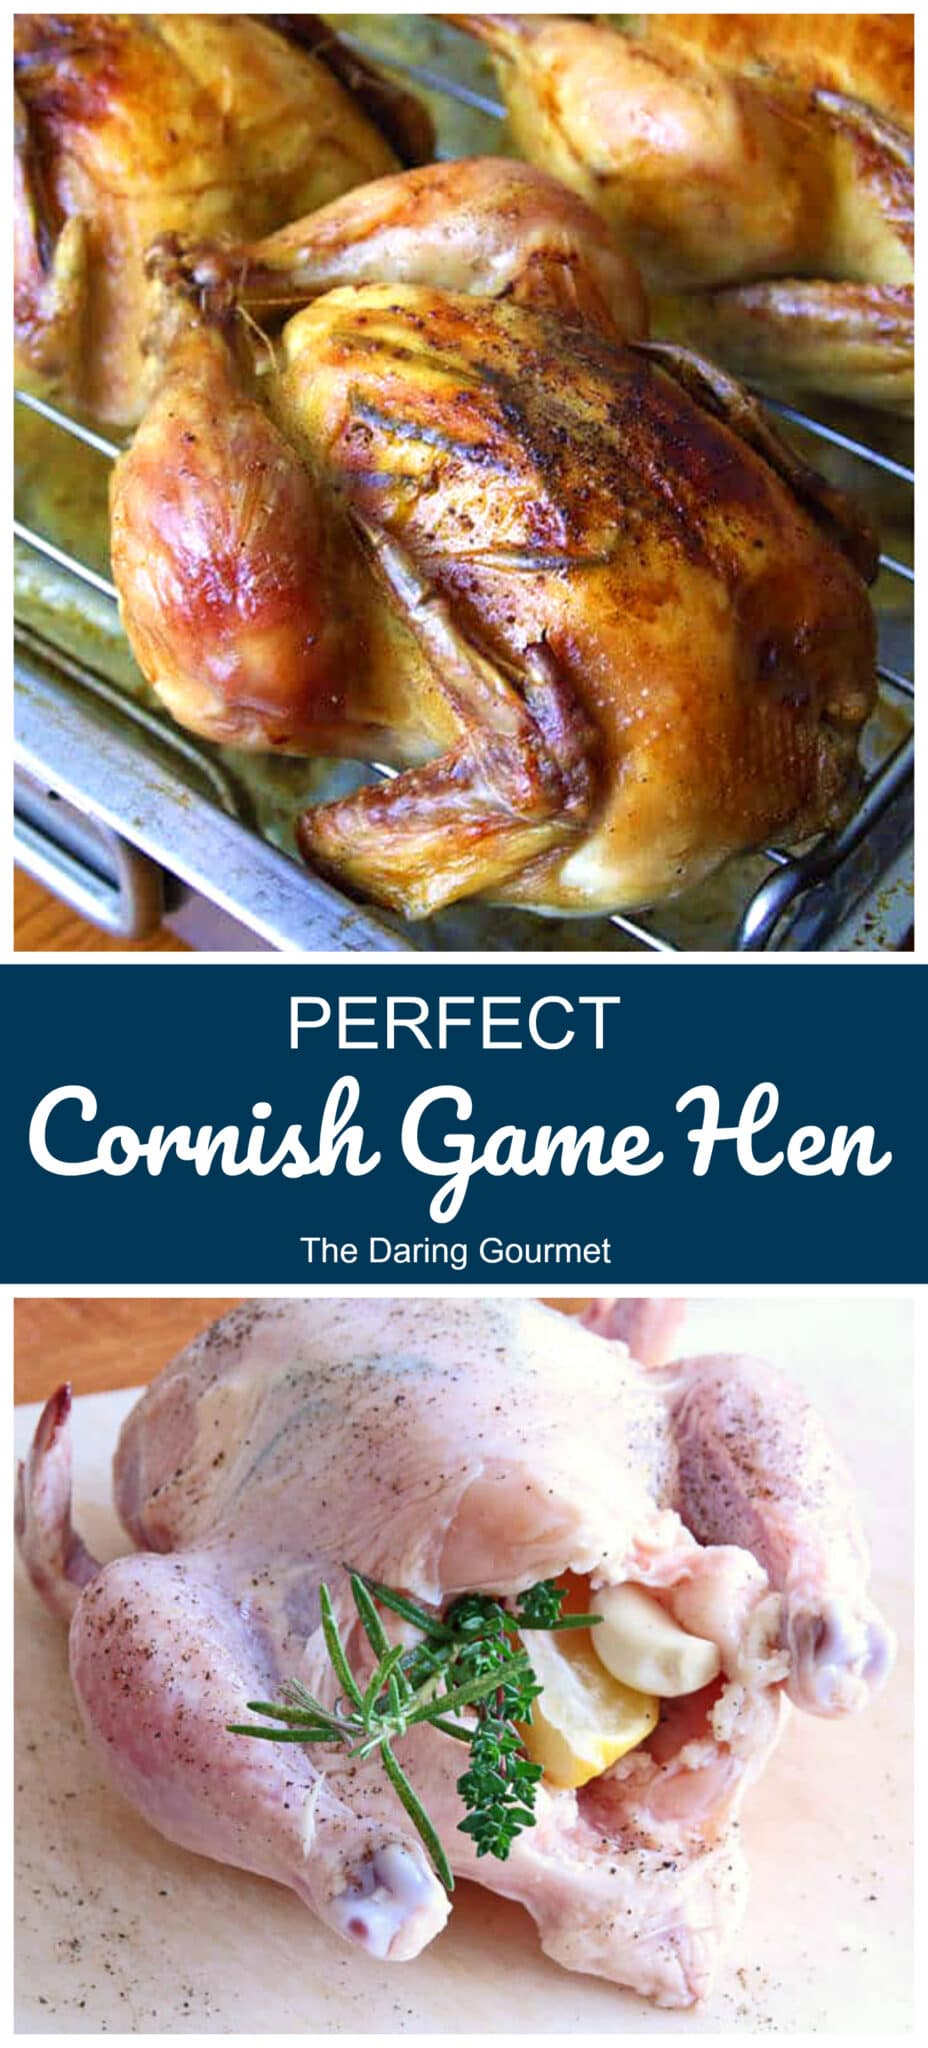 cornish game hen recipe best roasted lemon garlic herb rosemary thyme crispy skin